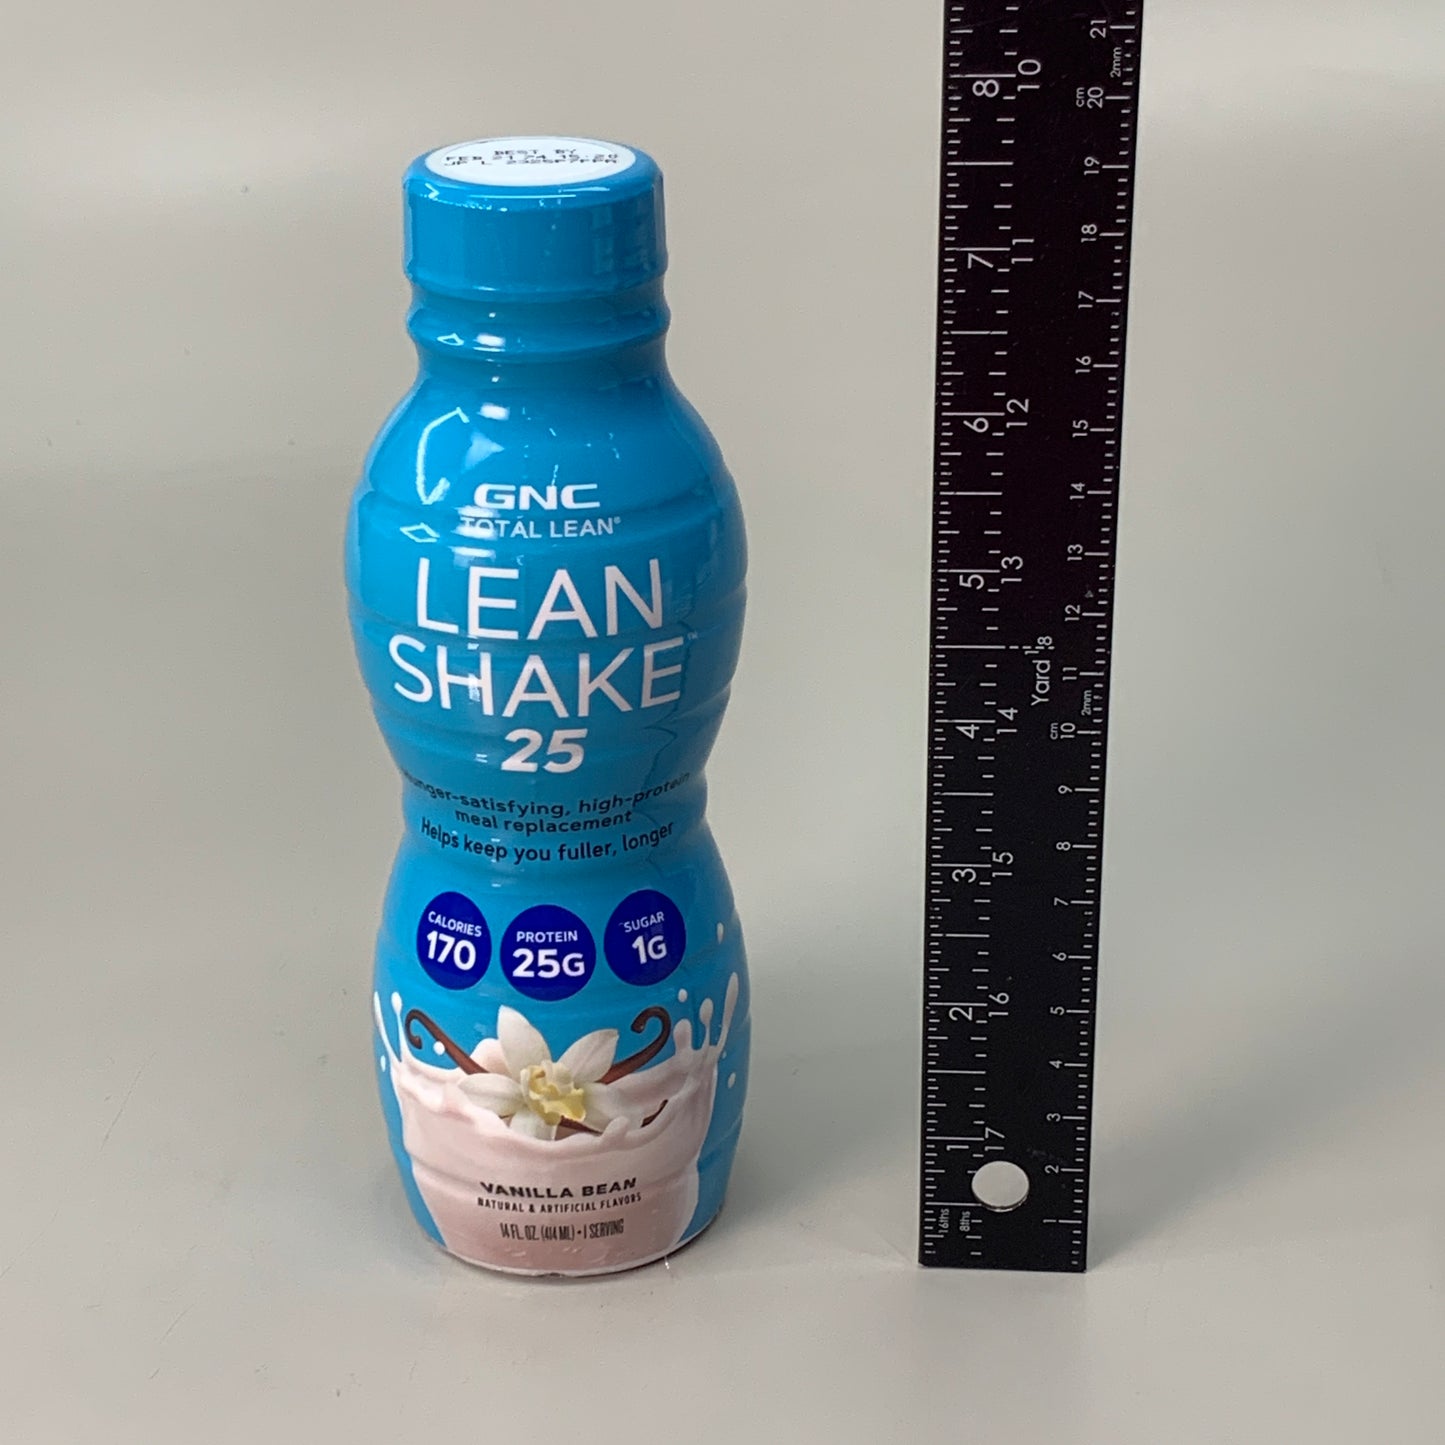 GNC TOTAL LEAN Lean Shake 25 Vanilla Bean 12-14 FL oz. 12 Servings 045858 Exp 02/24